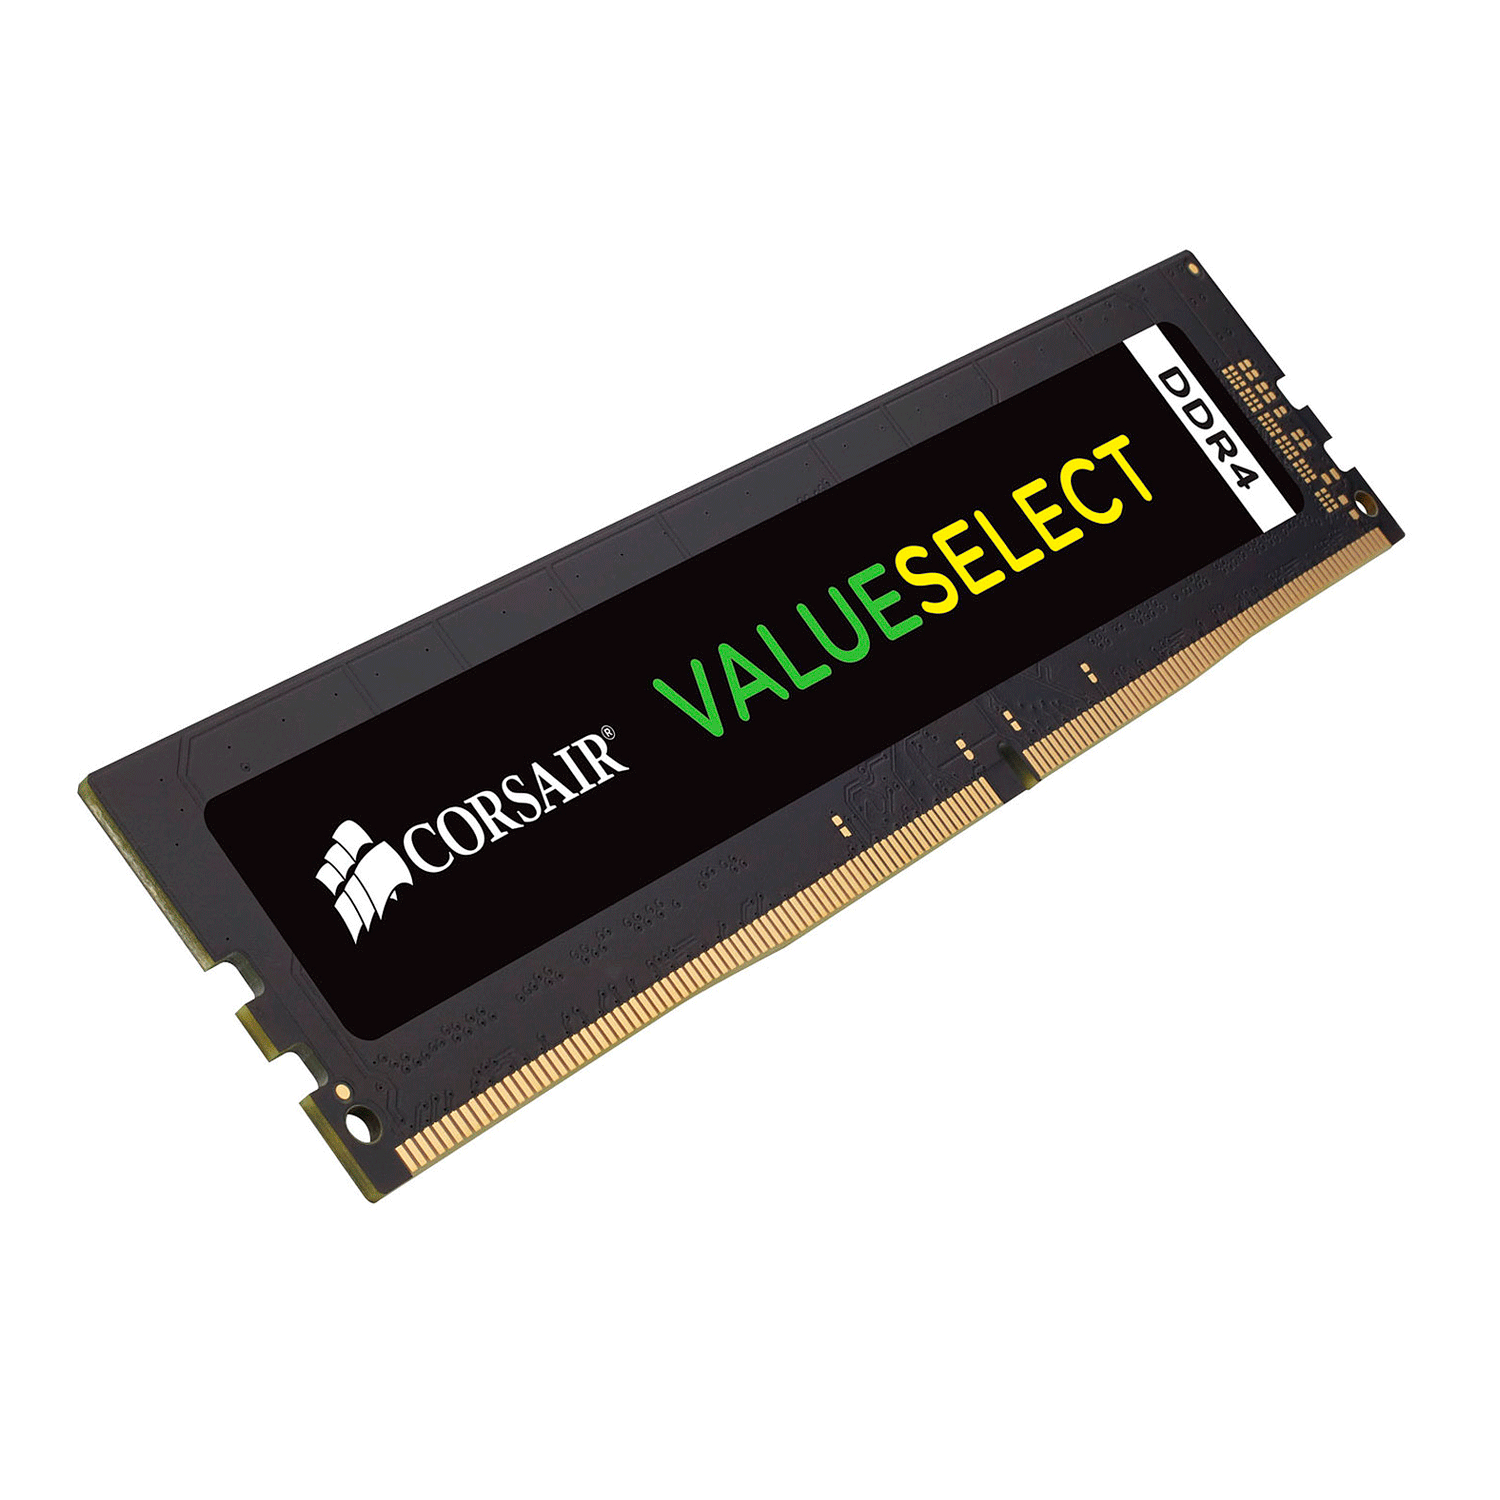 Memória RAM Corsair Valueselect 16GB / DDR4 / 2133MHZ - (CMV16GX4M1A2133C15)